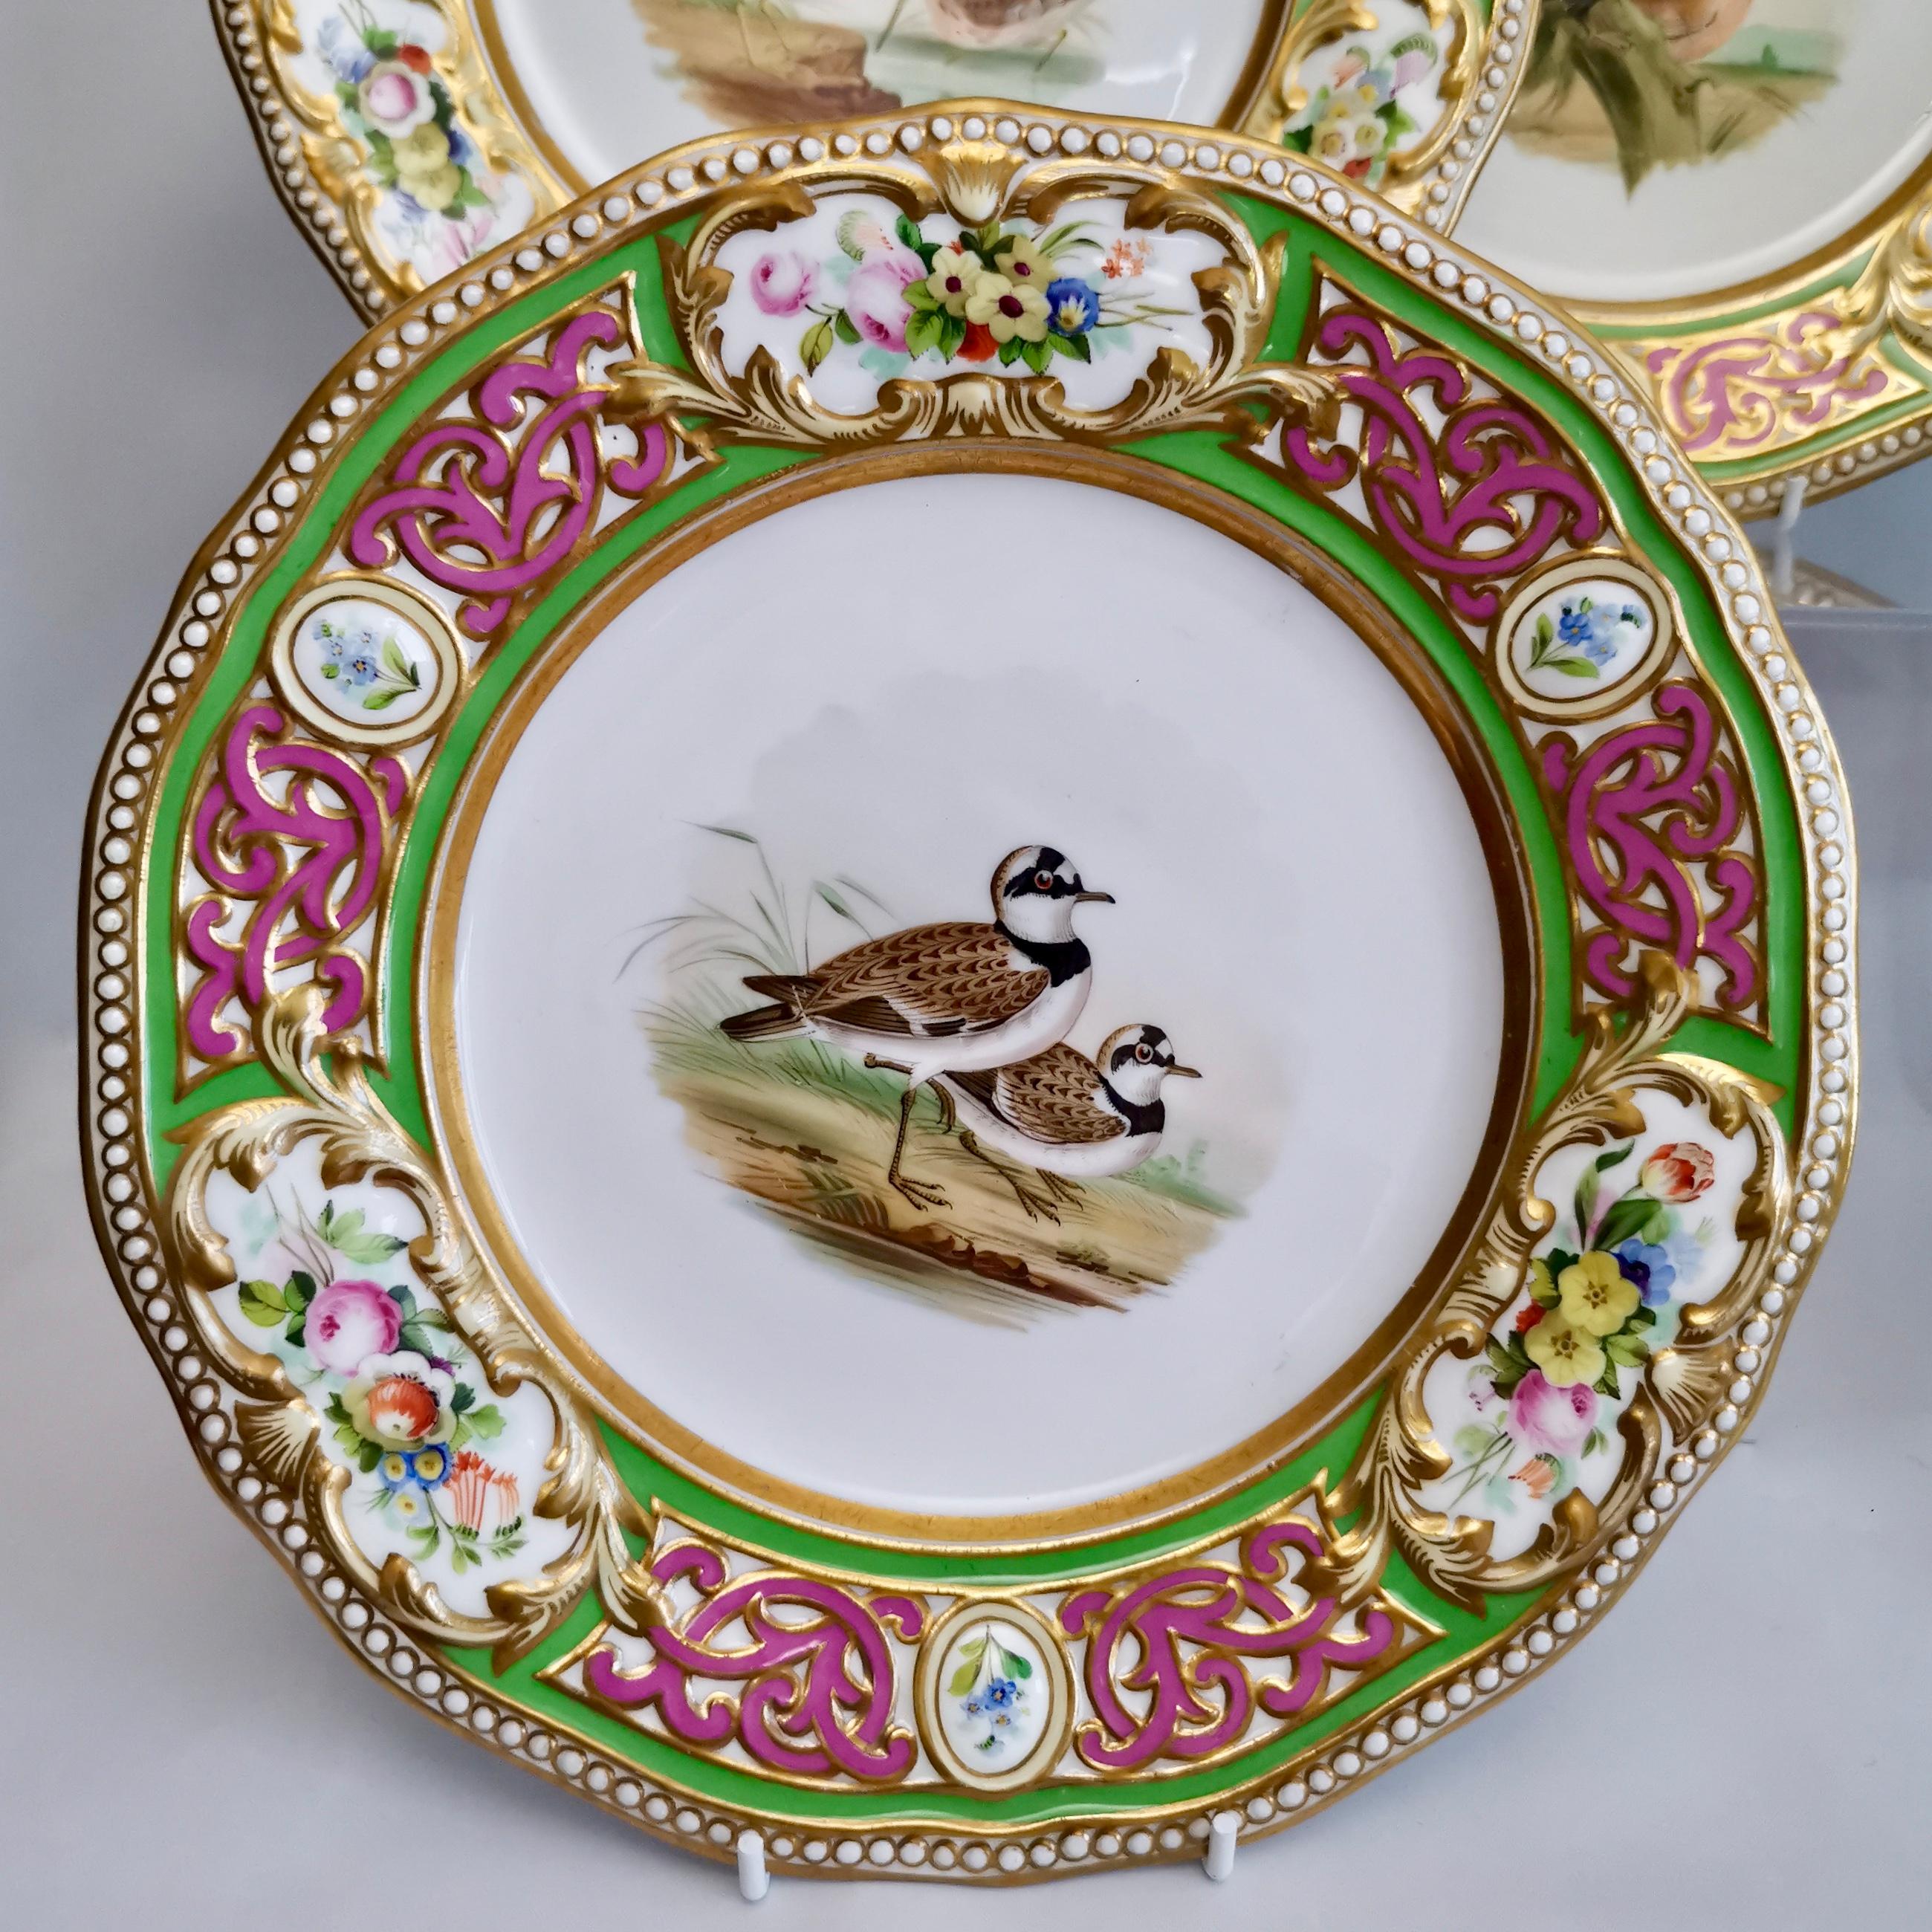 Grainger Worcester Porcelain Dessert Service, Persian Revival with Birds, 1855 3